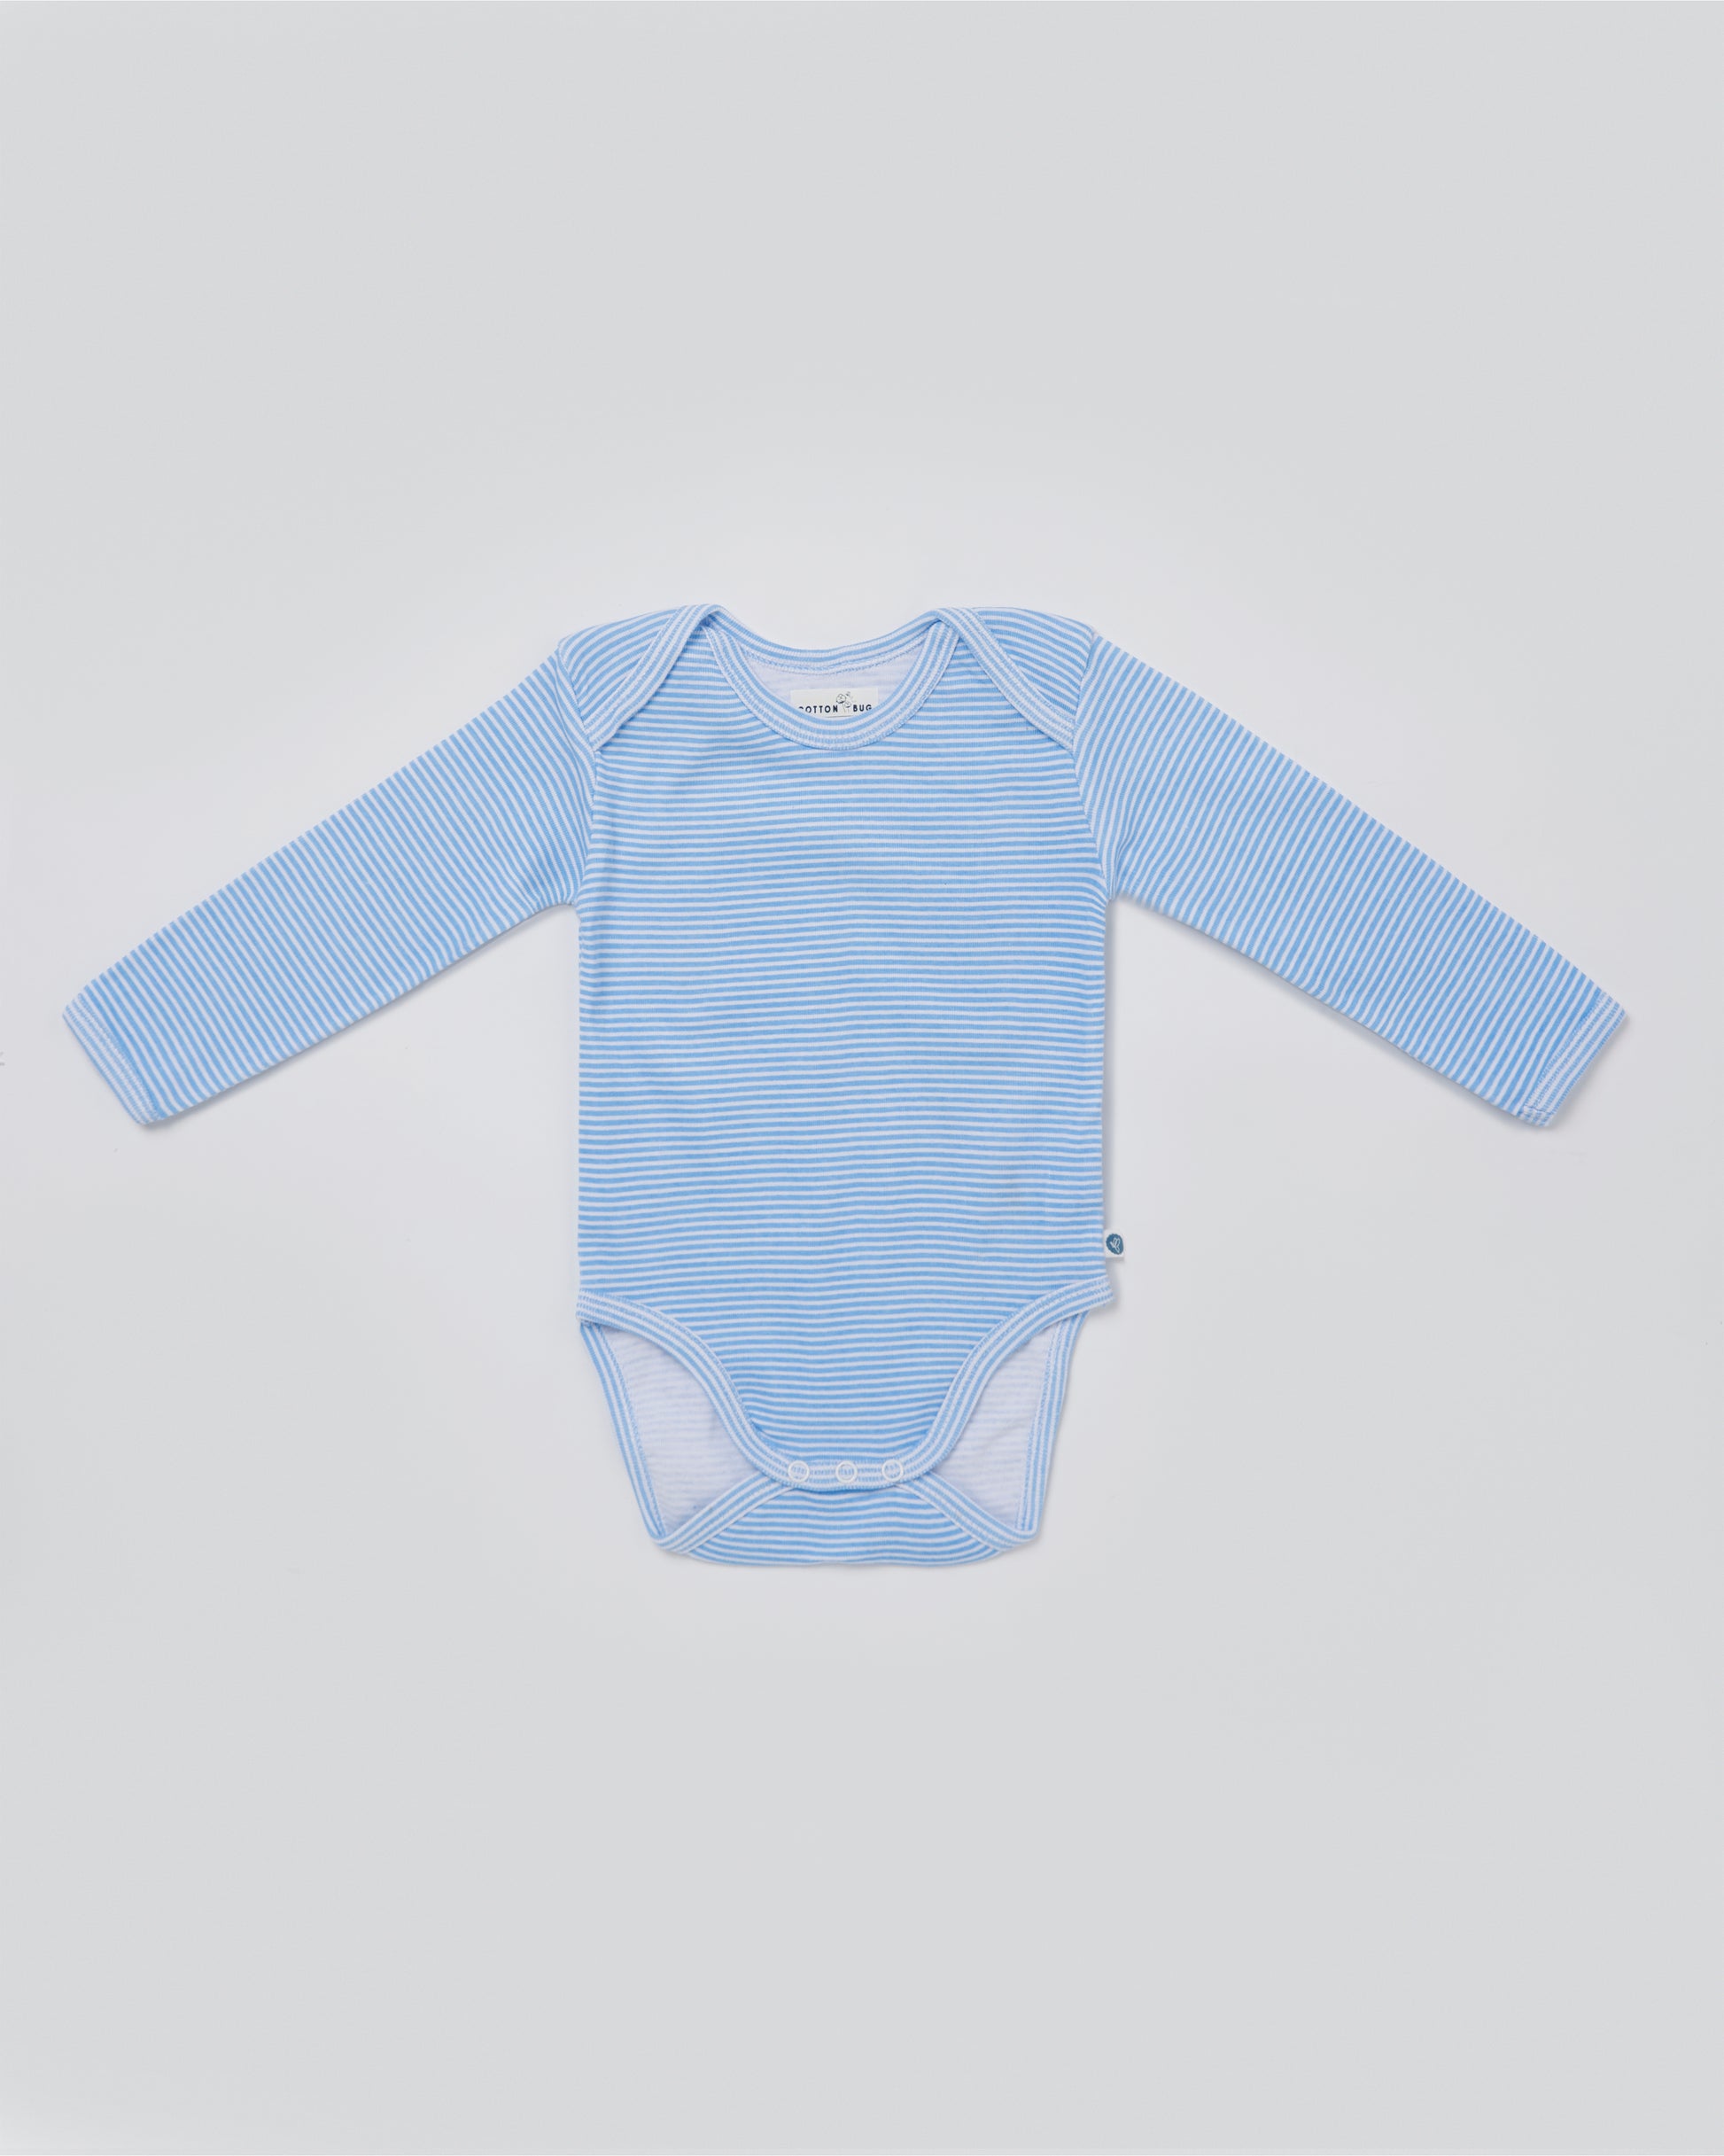 Unisex Striped Organic-Cotton Bodysuit & Pants Set for Baby